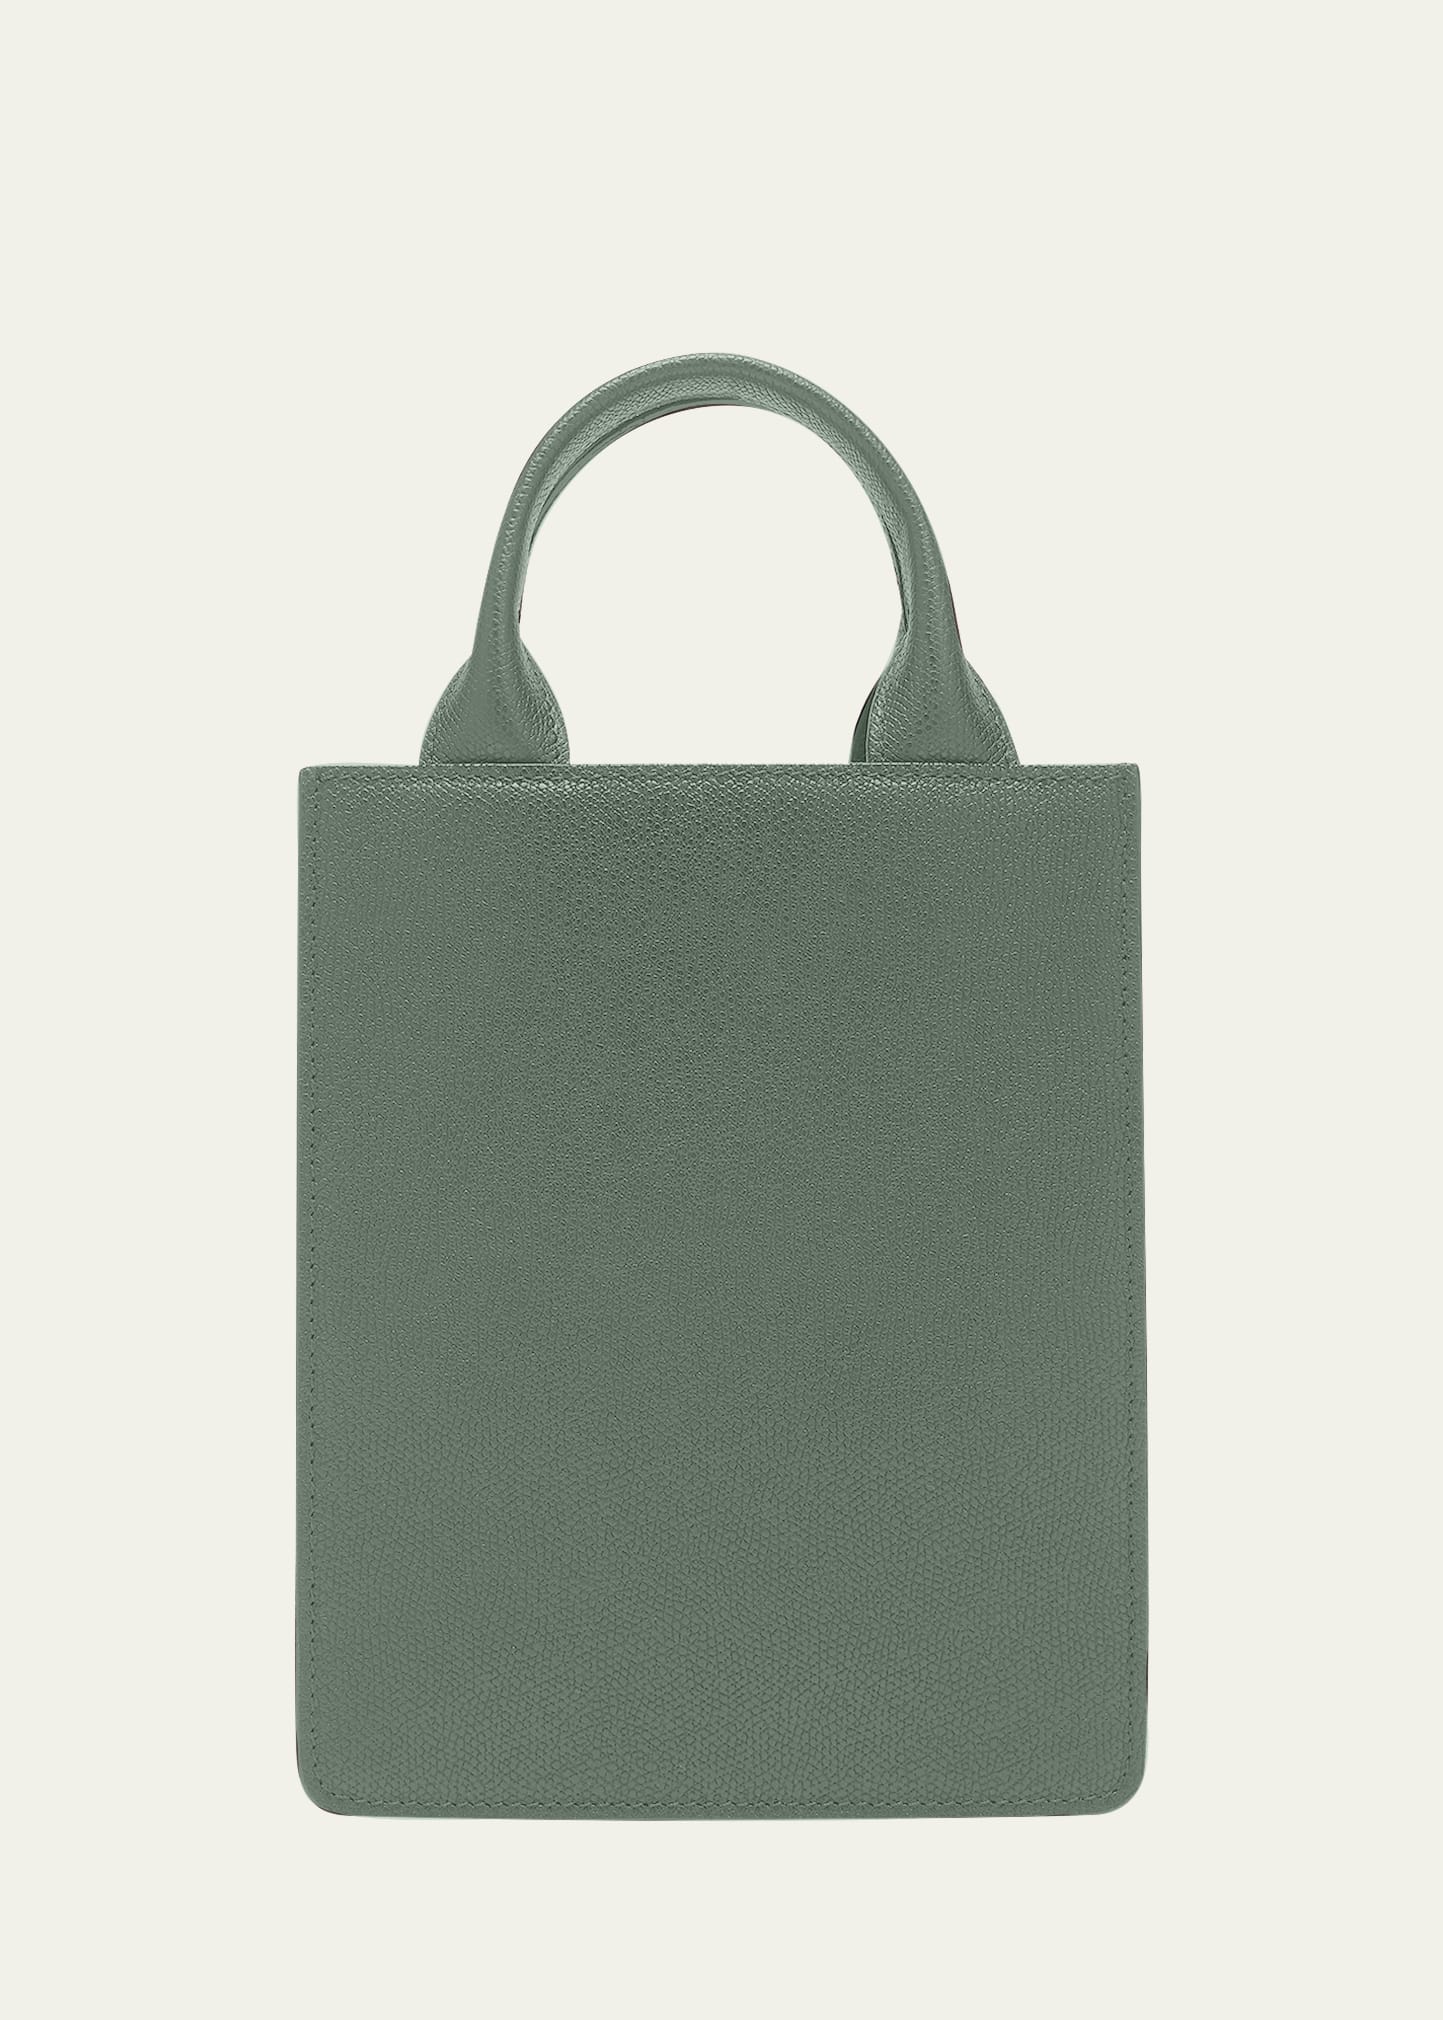 Mini Boxy Leather Top-Handle Bag